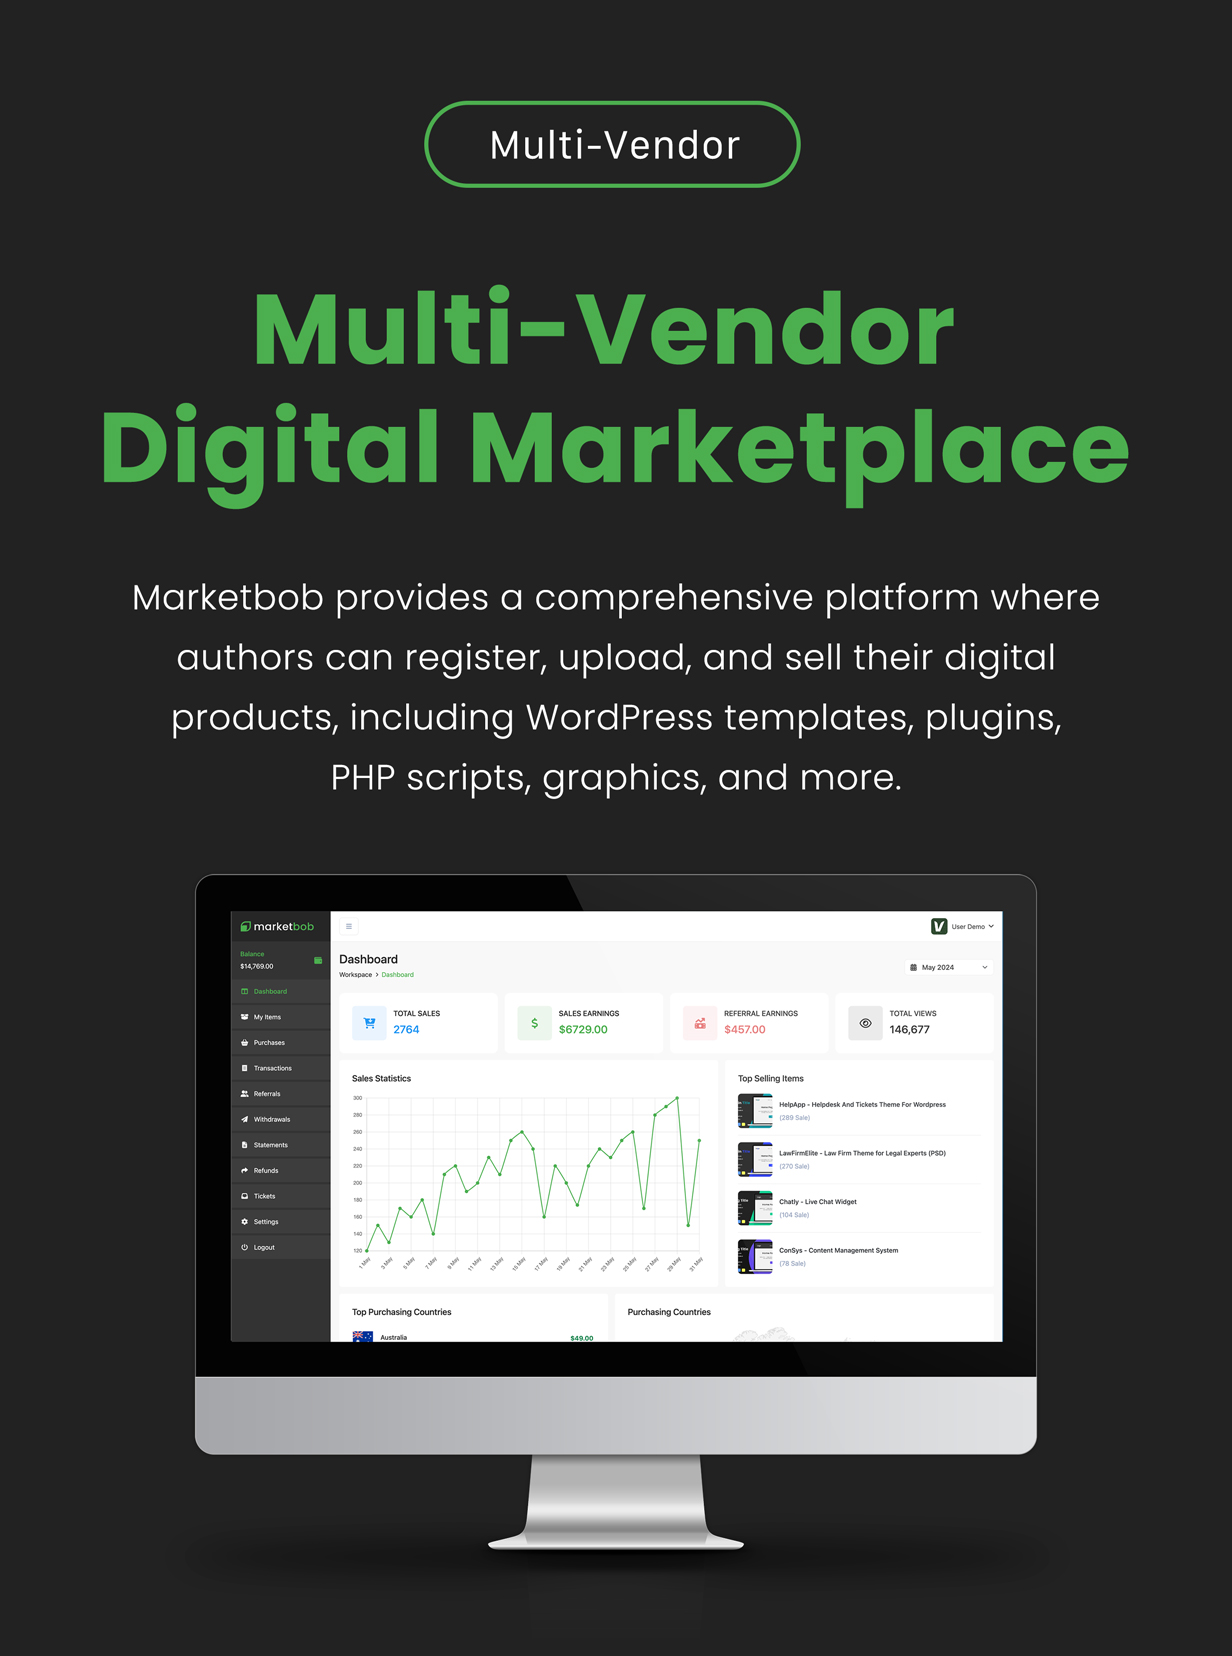 Marketbob - Multi-Vendor Digital Marketplace - 8